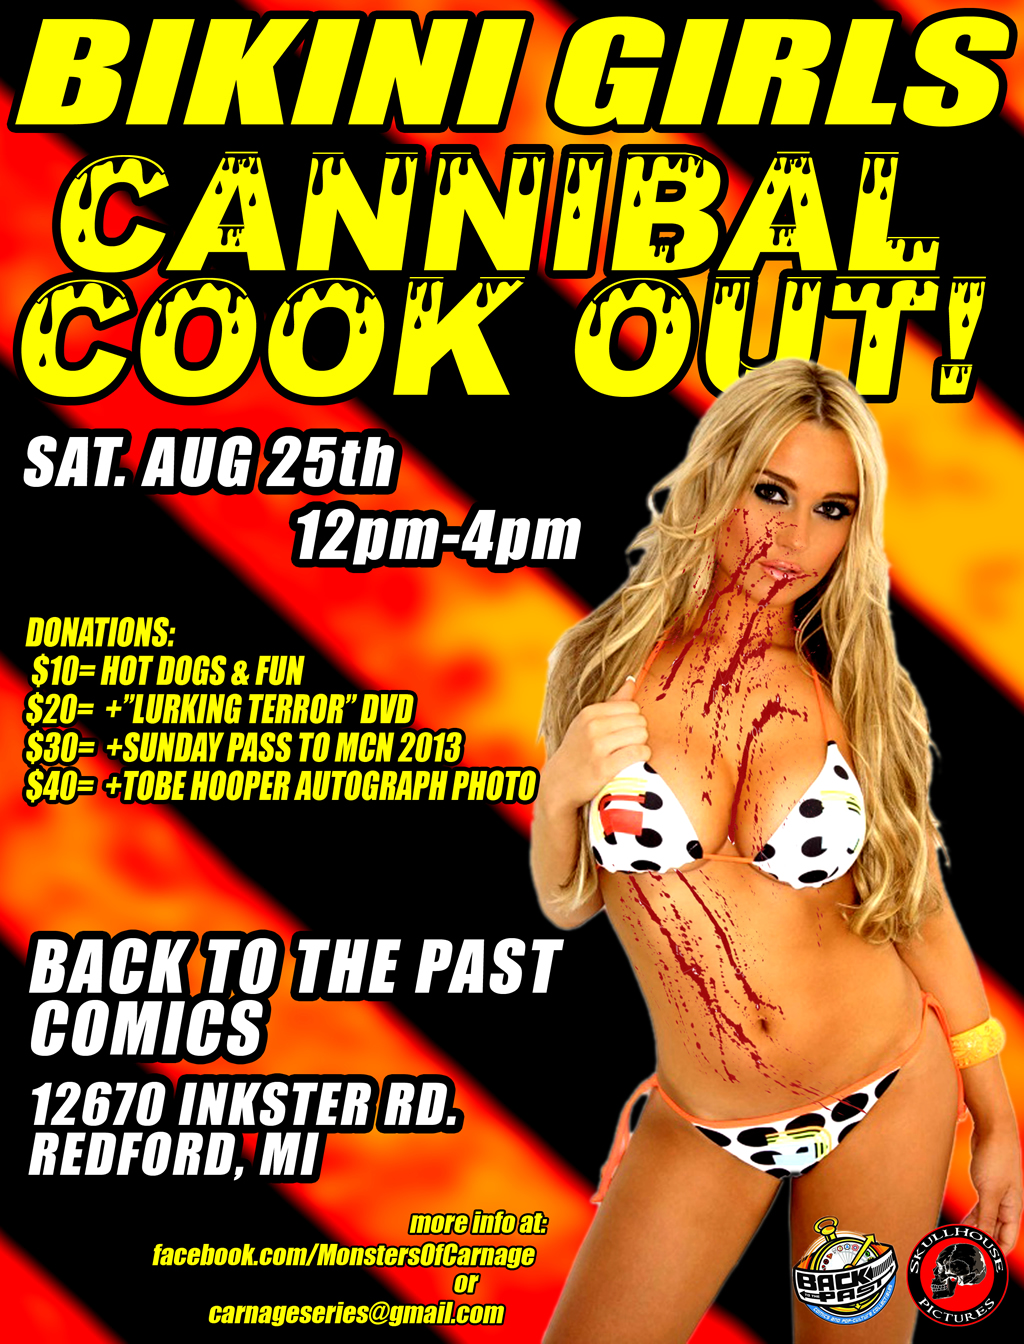 Bikini Girls Cannibal Cook Out!